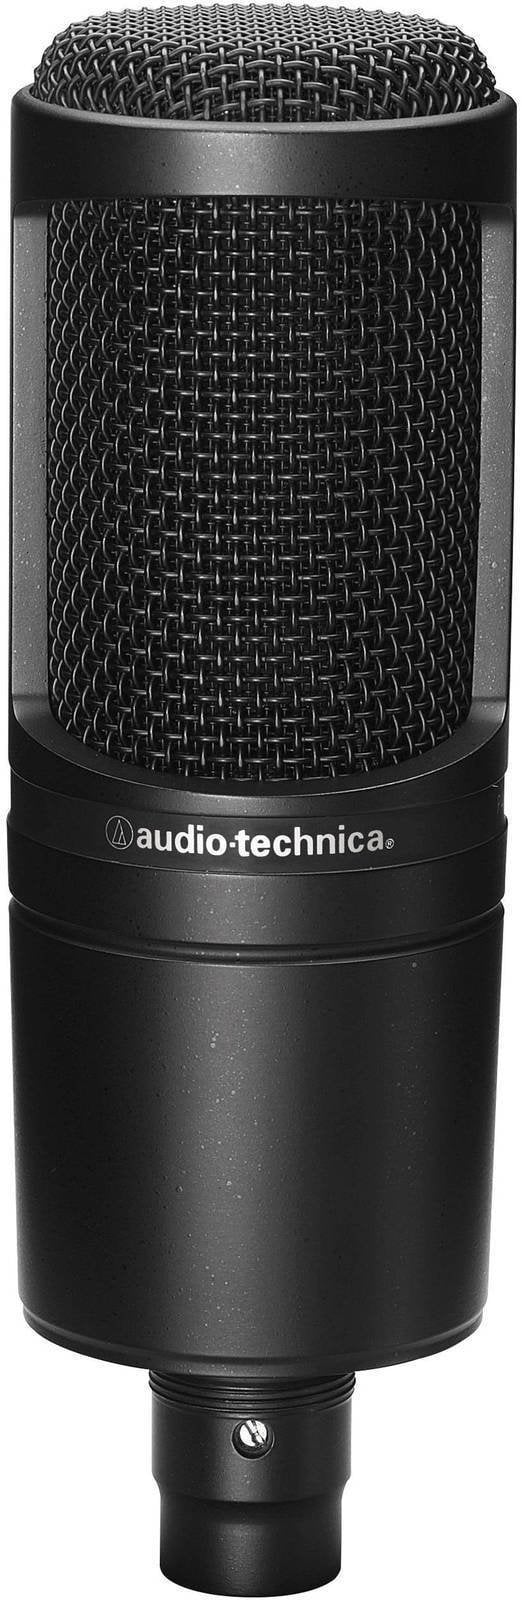 Studio Condenser Microphone Audio-Technica AT2020 Studio Condenser Microphone